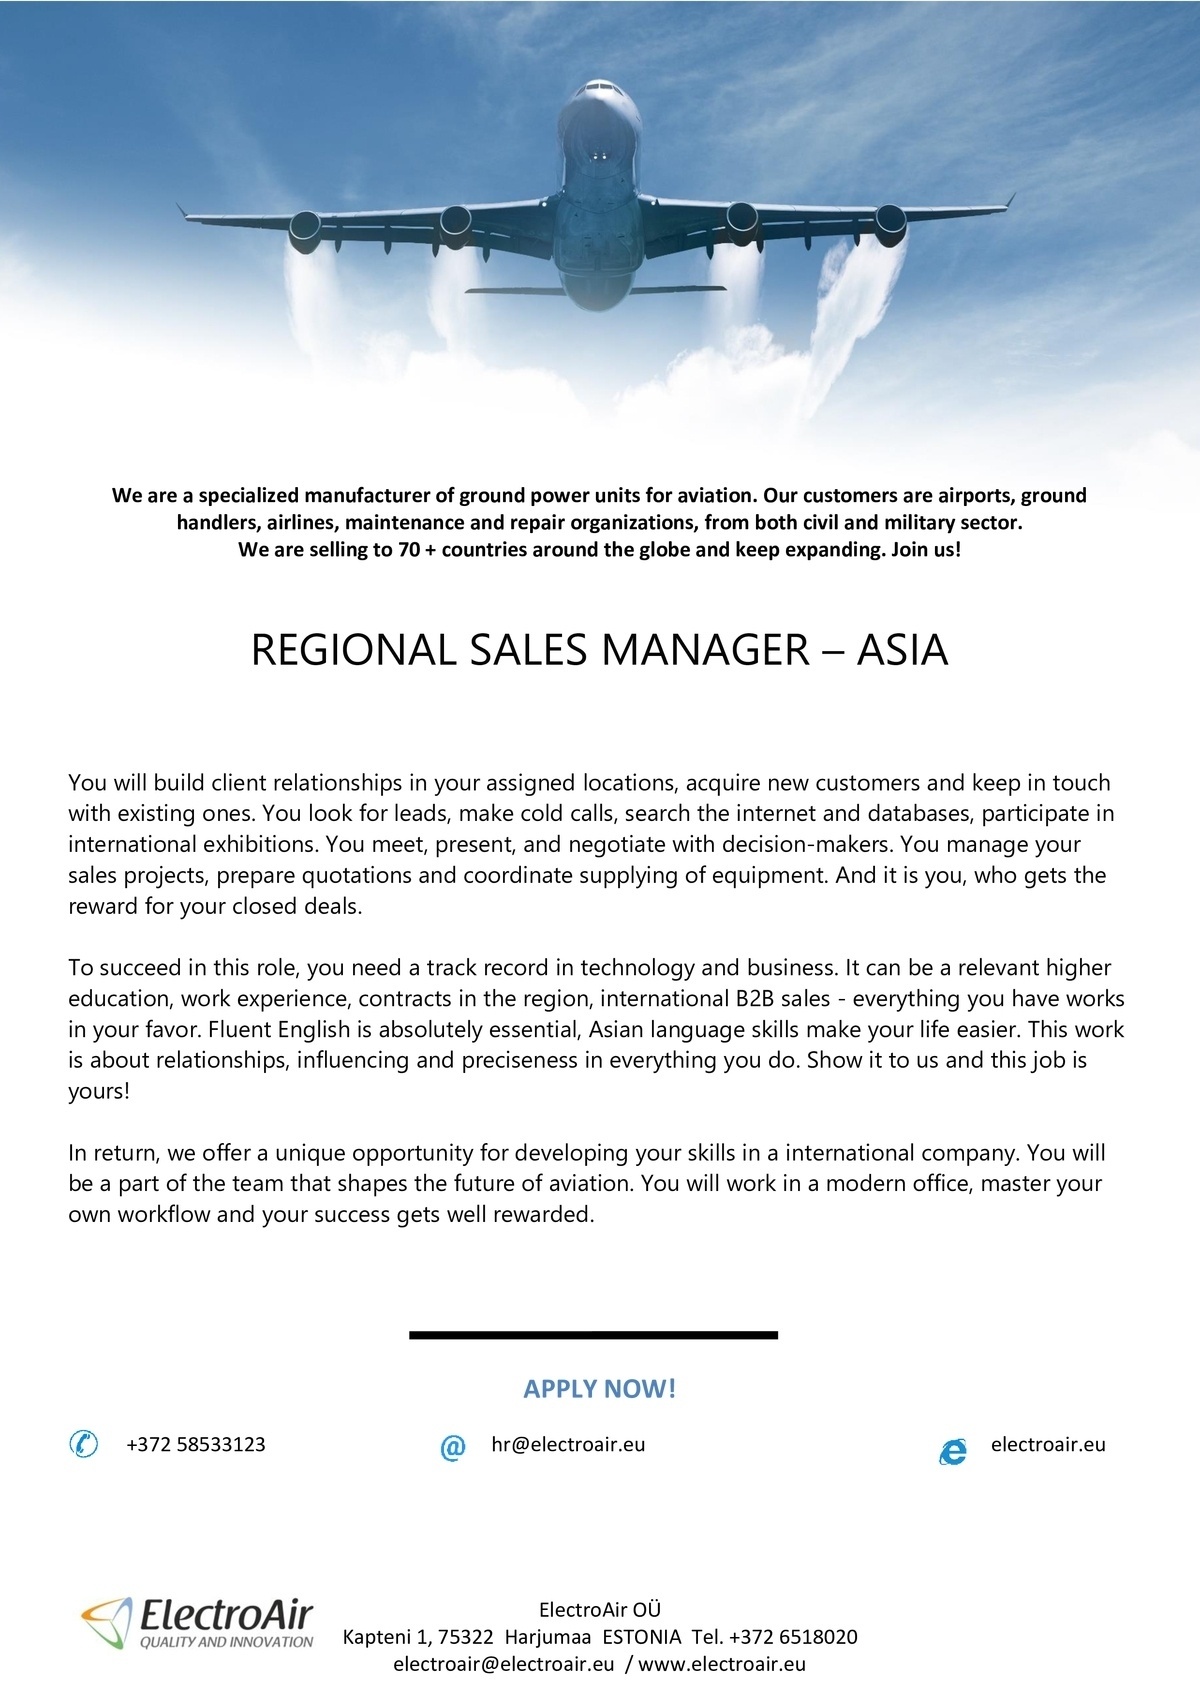 CVKeskus.ee client Regional Sales Manager (Asia)